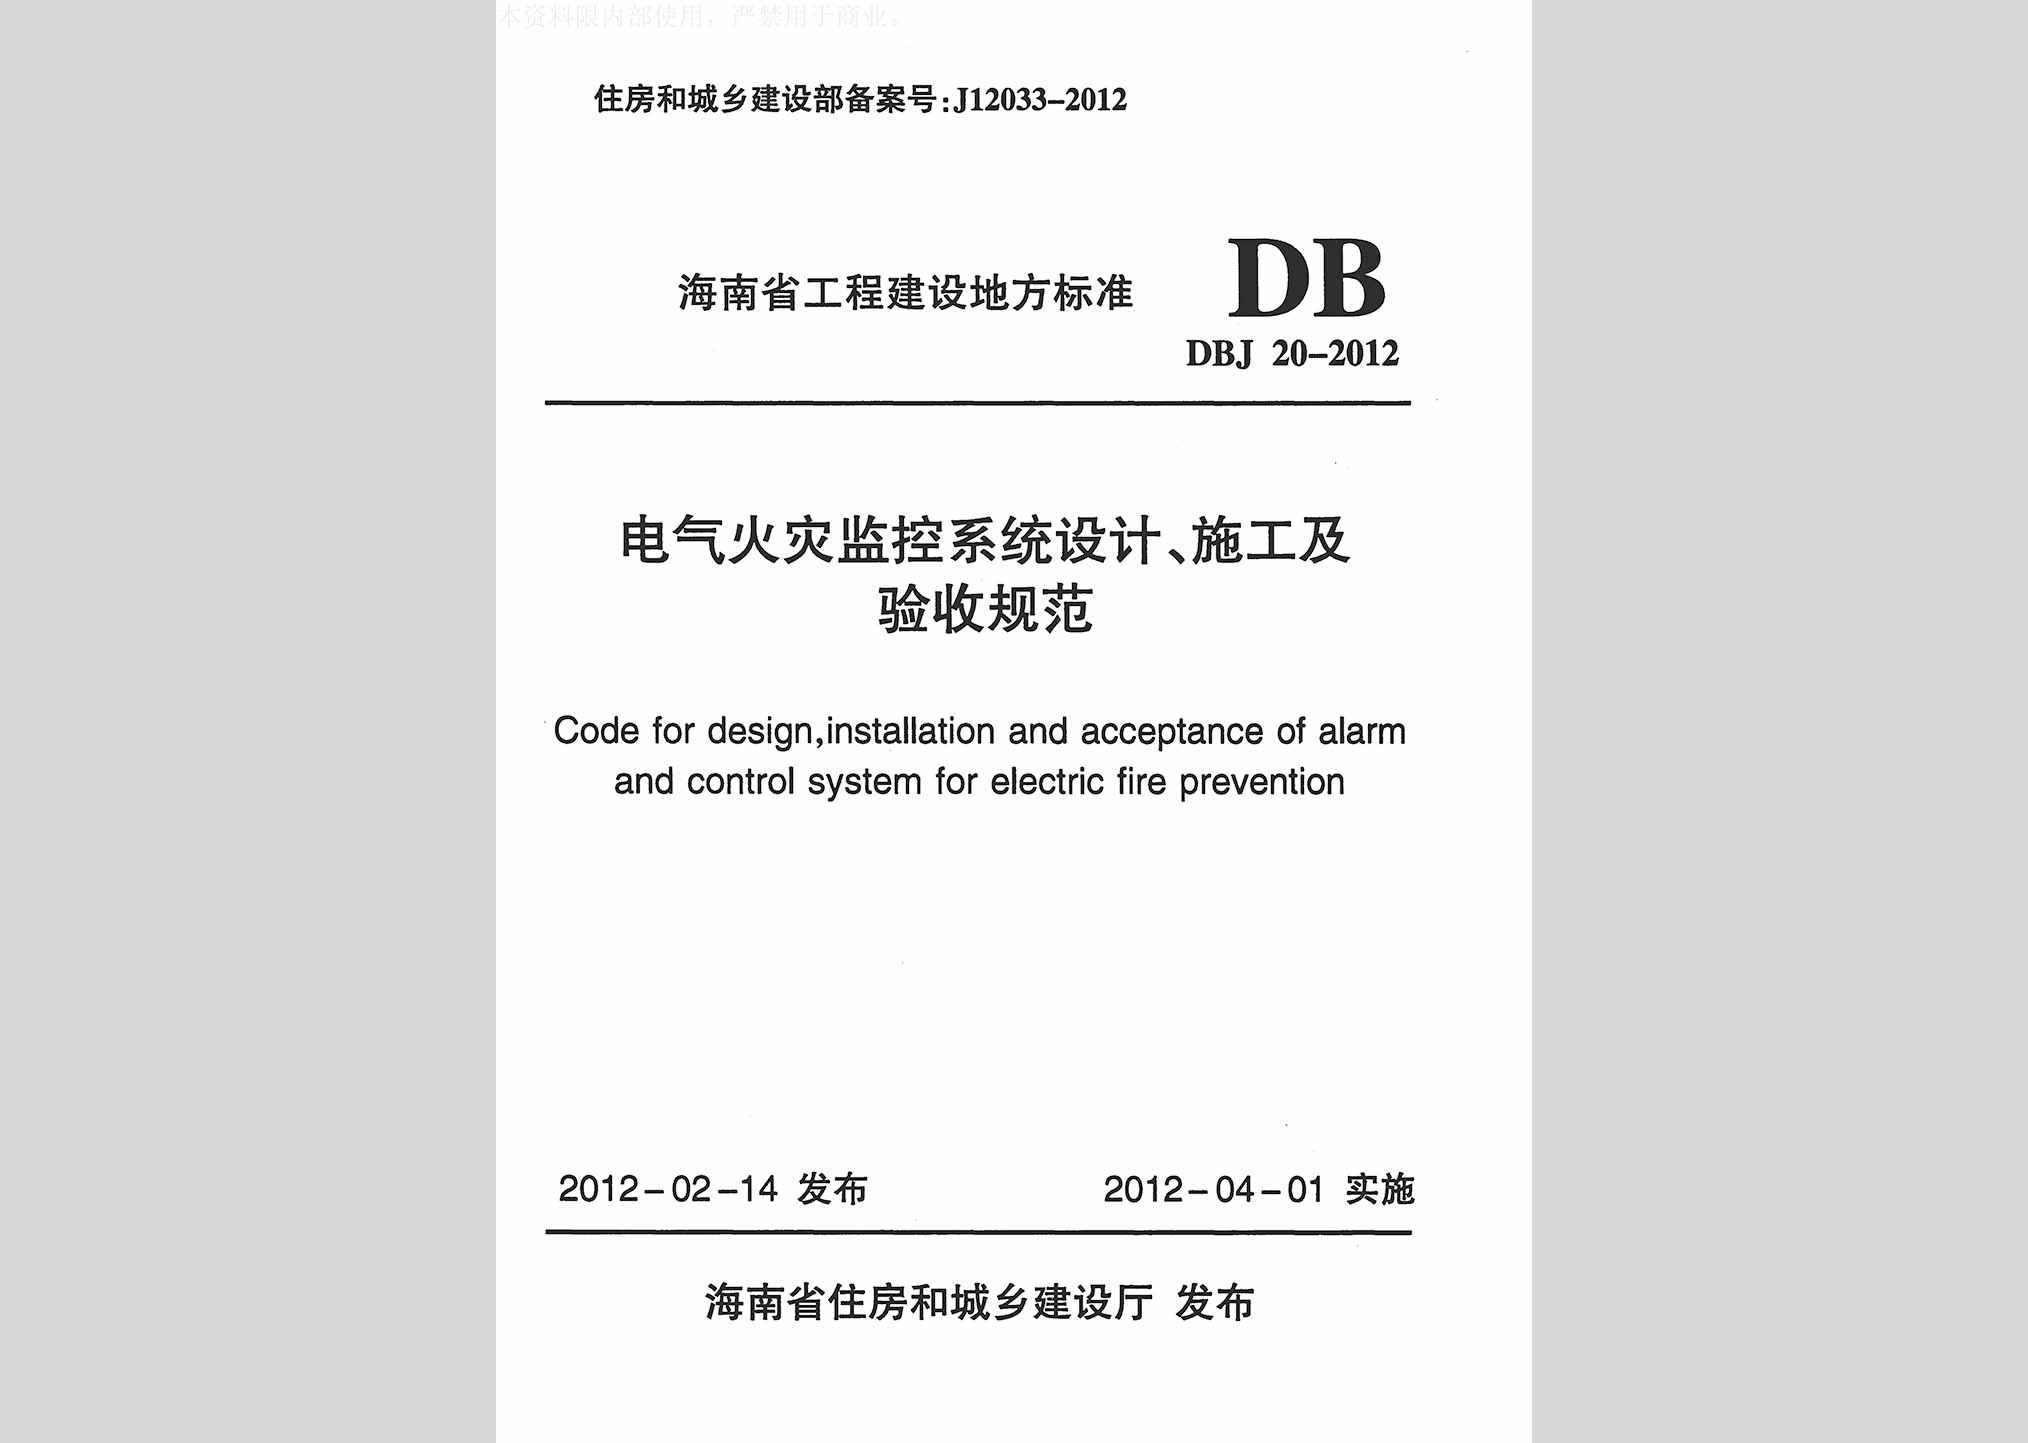 DBJ20-2012：电气火灾监控系统设计、施工及验收规范